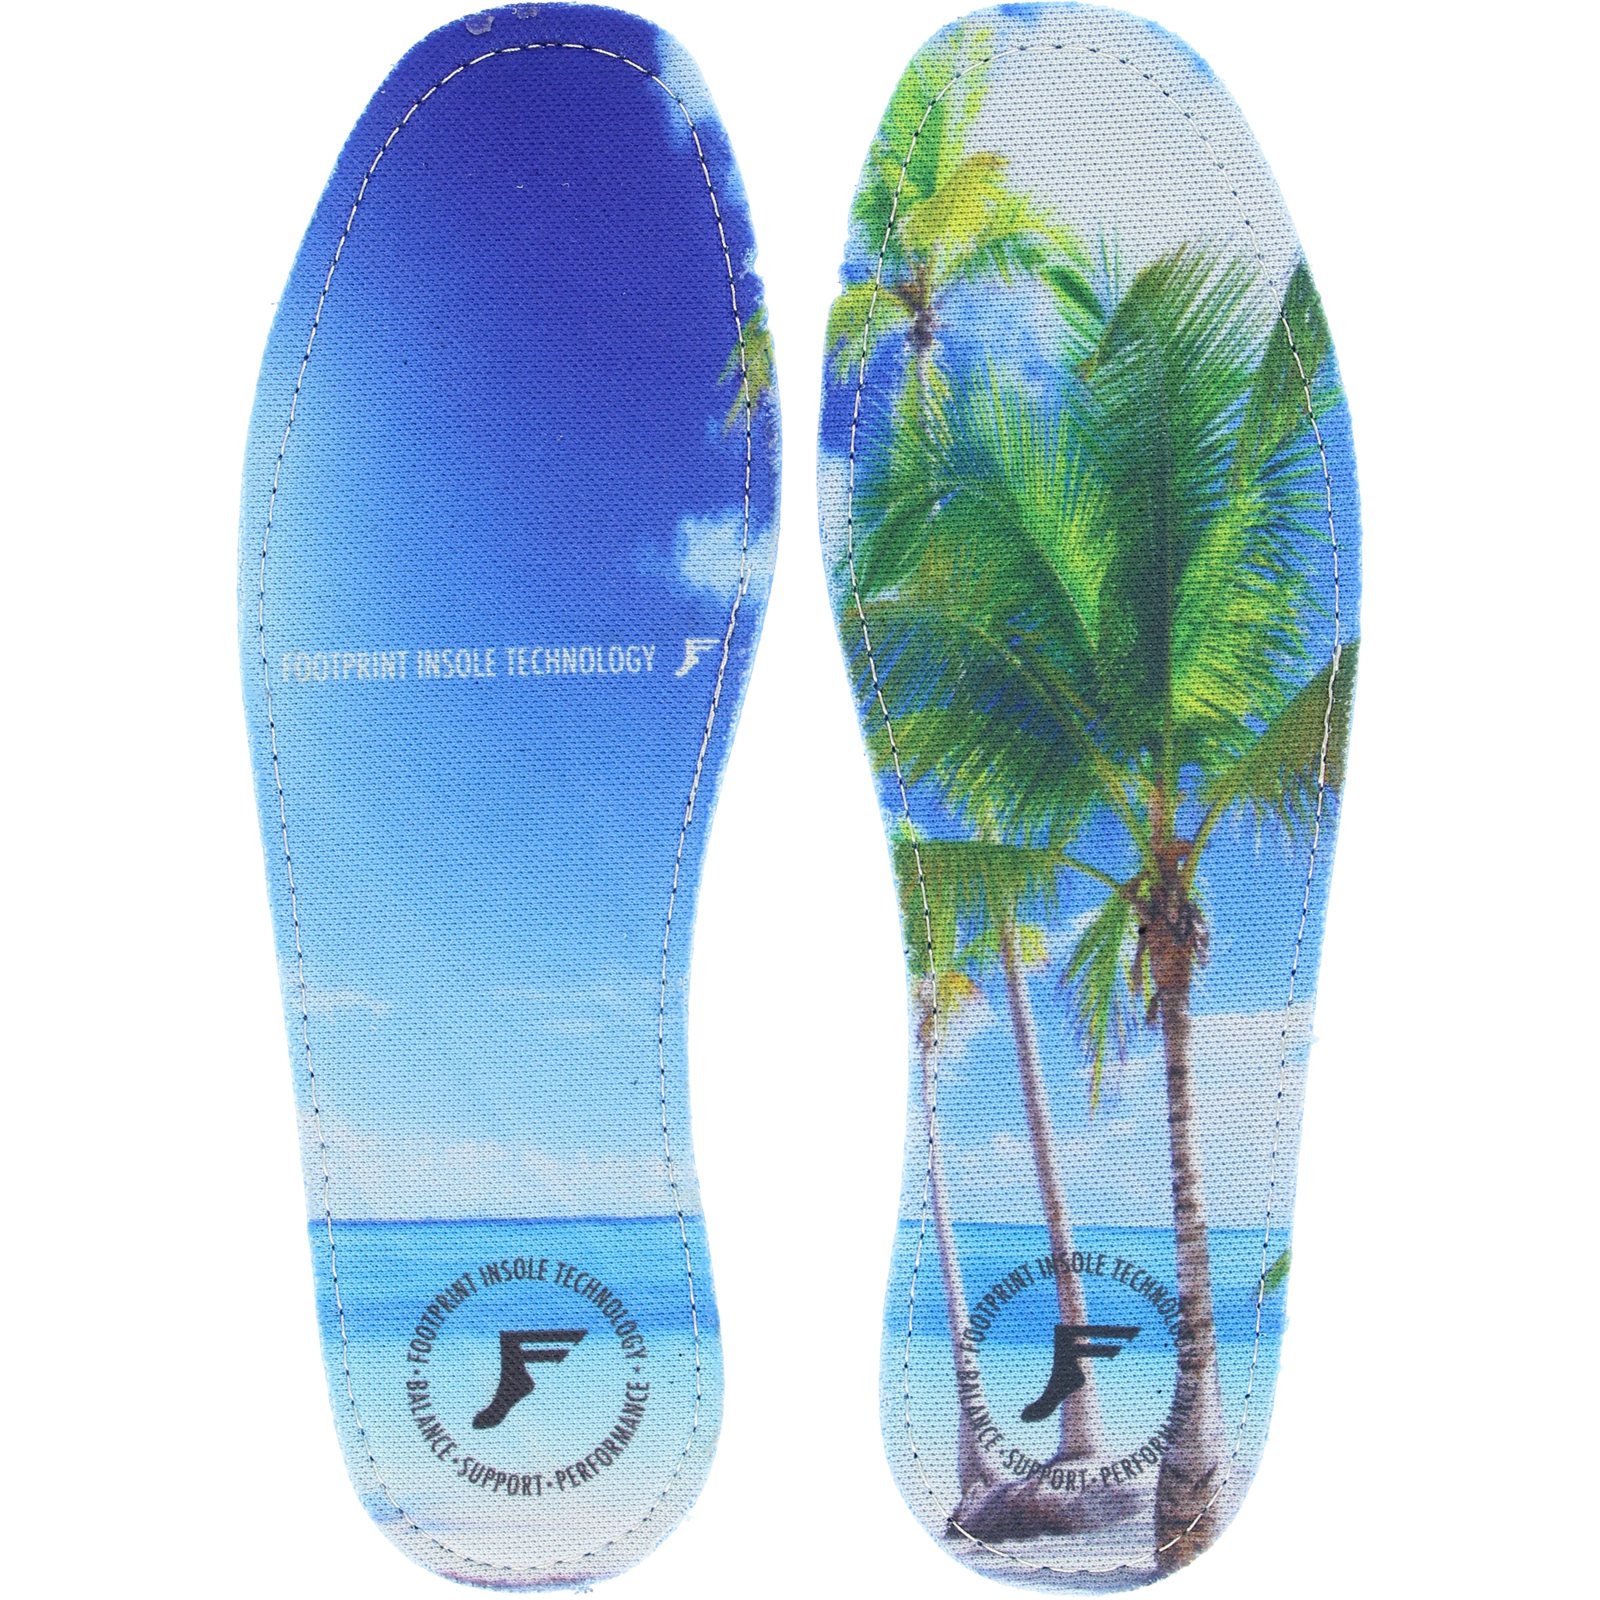 Footprint Hi Profile Kingfoam Beach 7-7.5 Insole | Universo Extremo Boards Skate & Surf